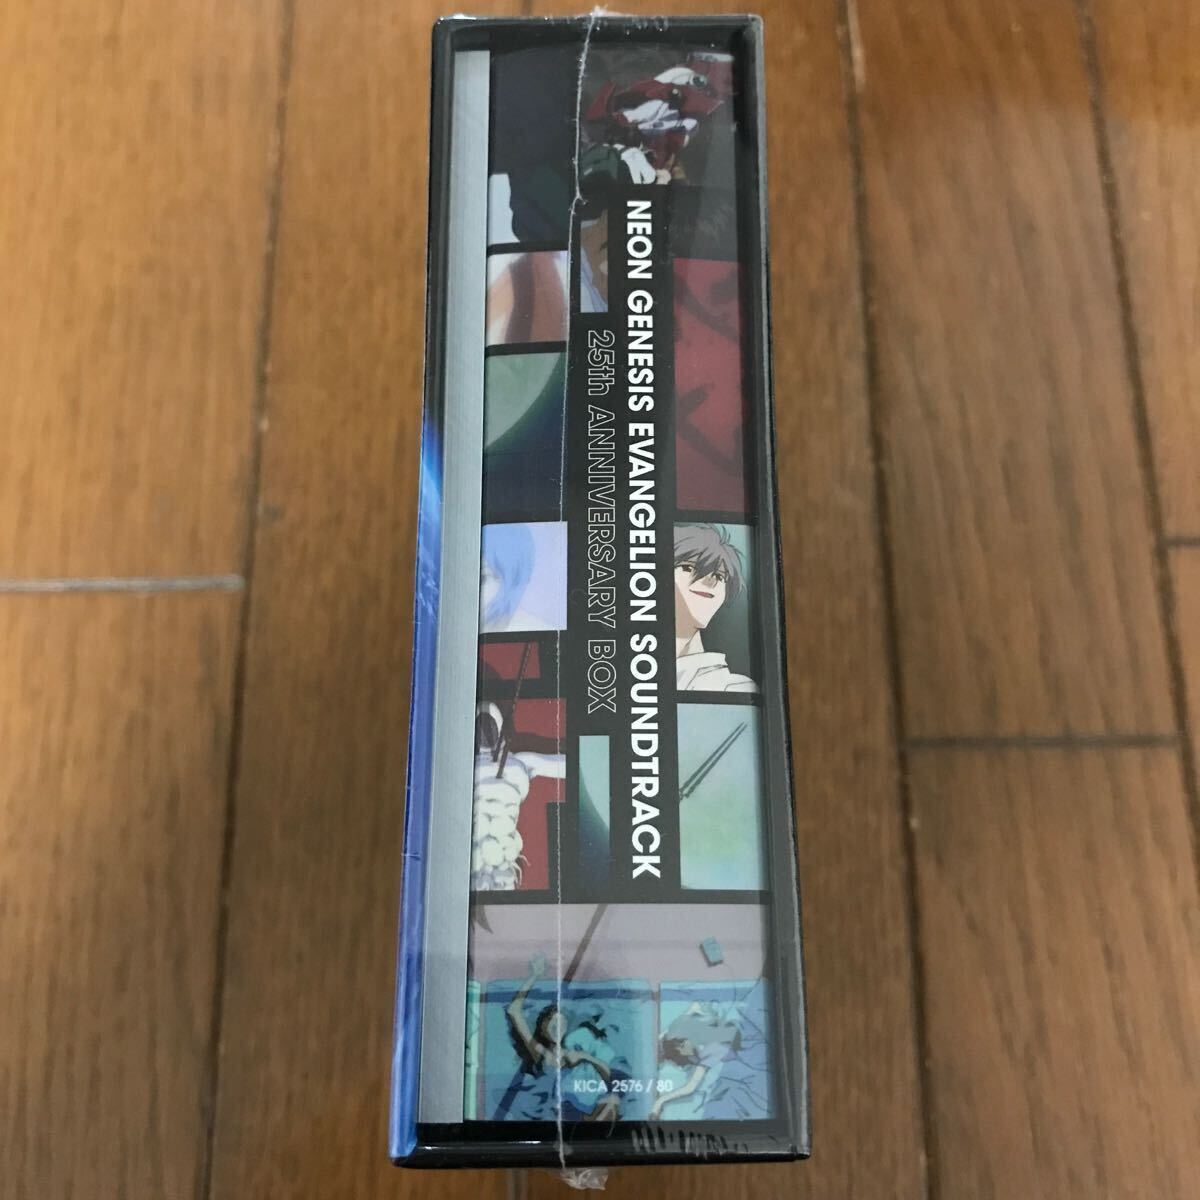 NEON GENESIS EVANGELION SOUNDTRACK 25th ANNIVERSARY BOX новый товар нераспечатанный Neon Genesis Evangelion оригинал саундтрек CD 5 листов комплект 